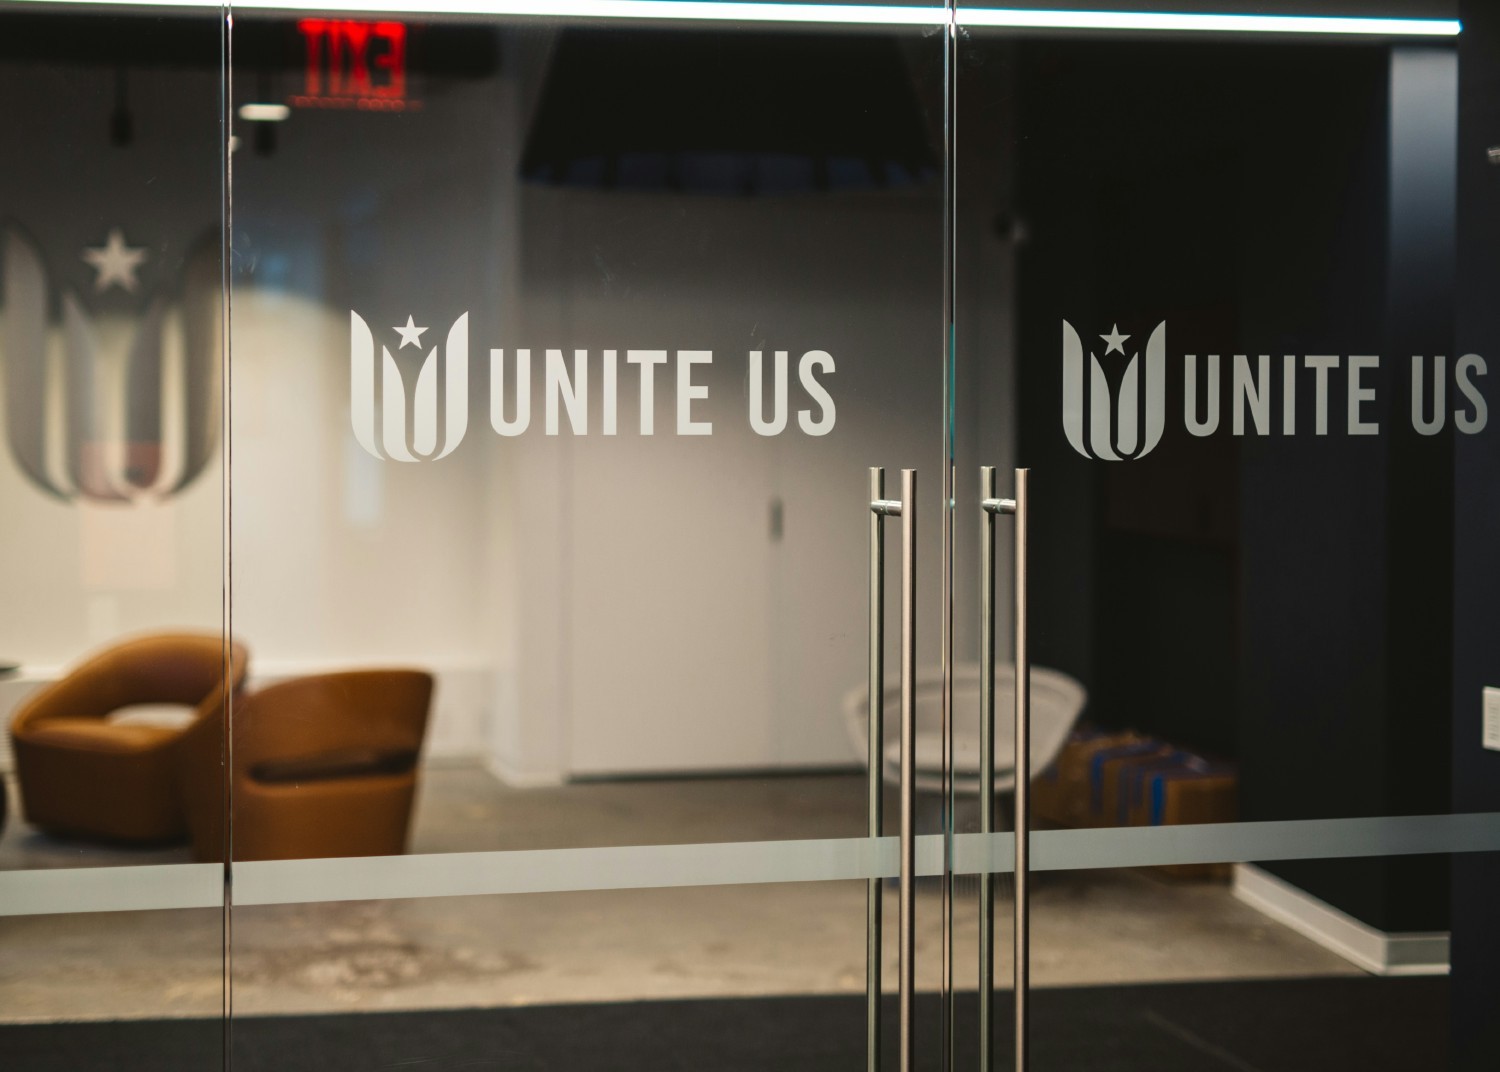 Unite Us headquarters in New York, New York